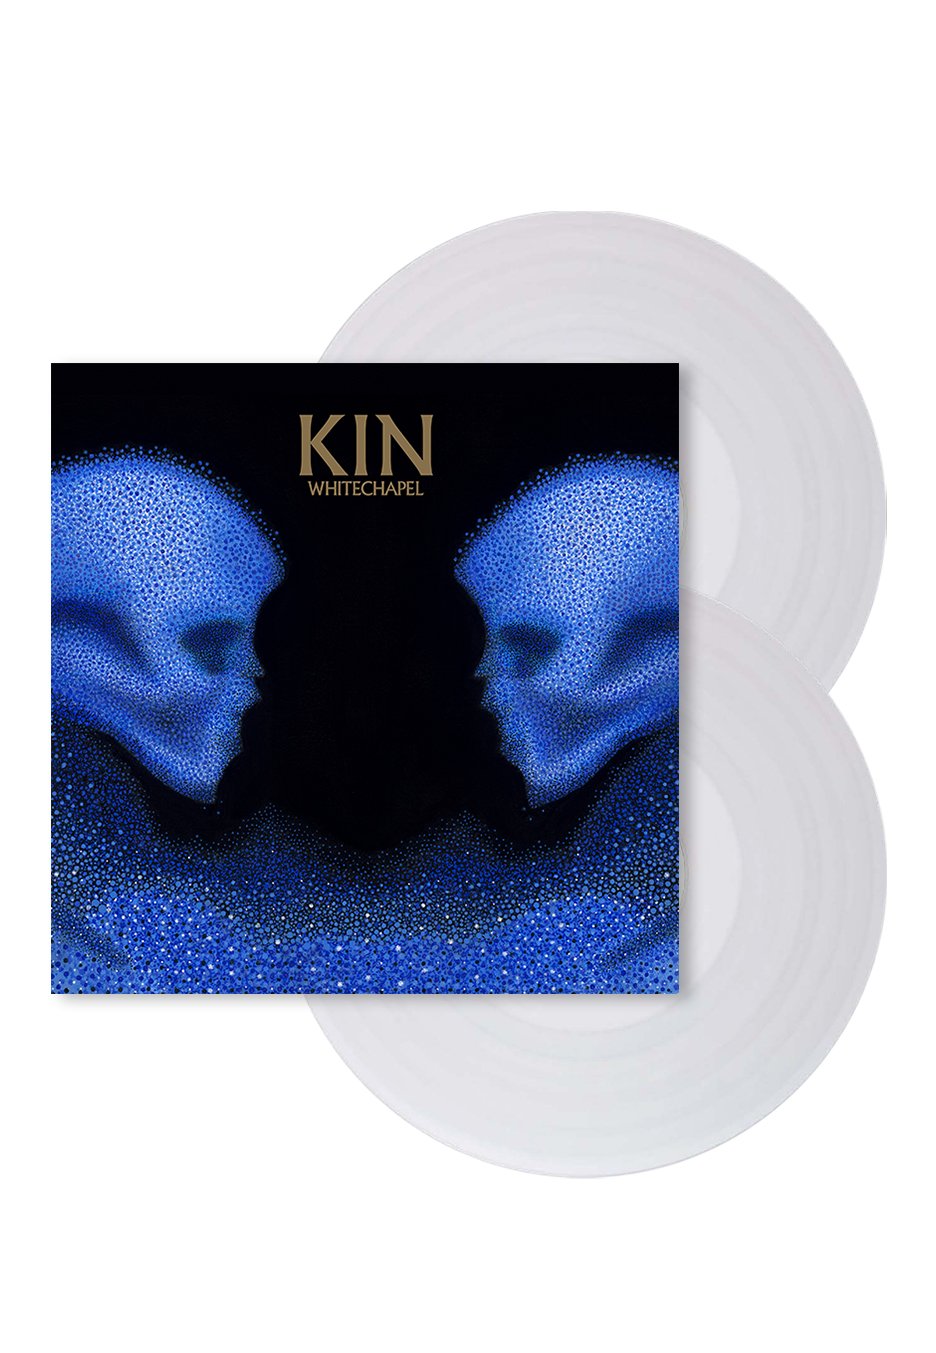 Whitechapel - Kin White - Colored 2 Vinyl